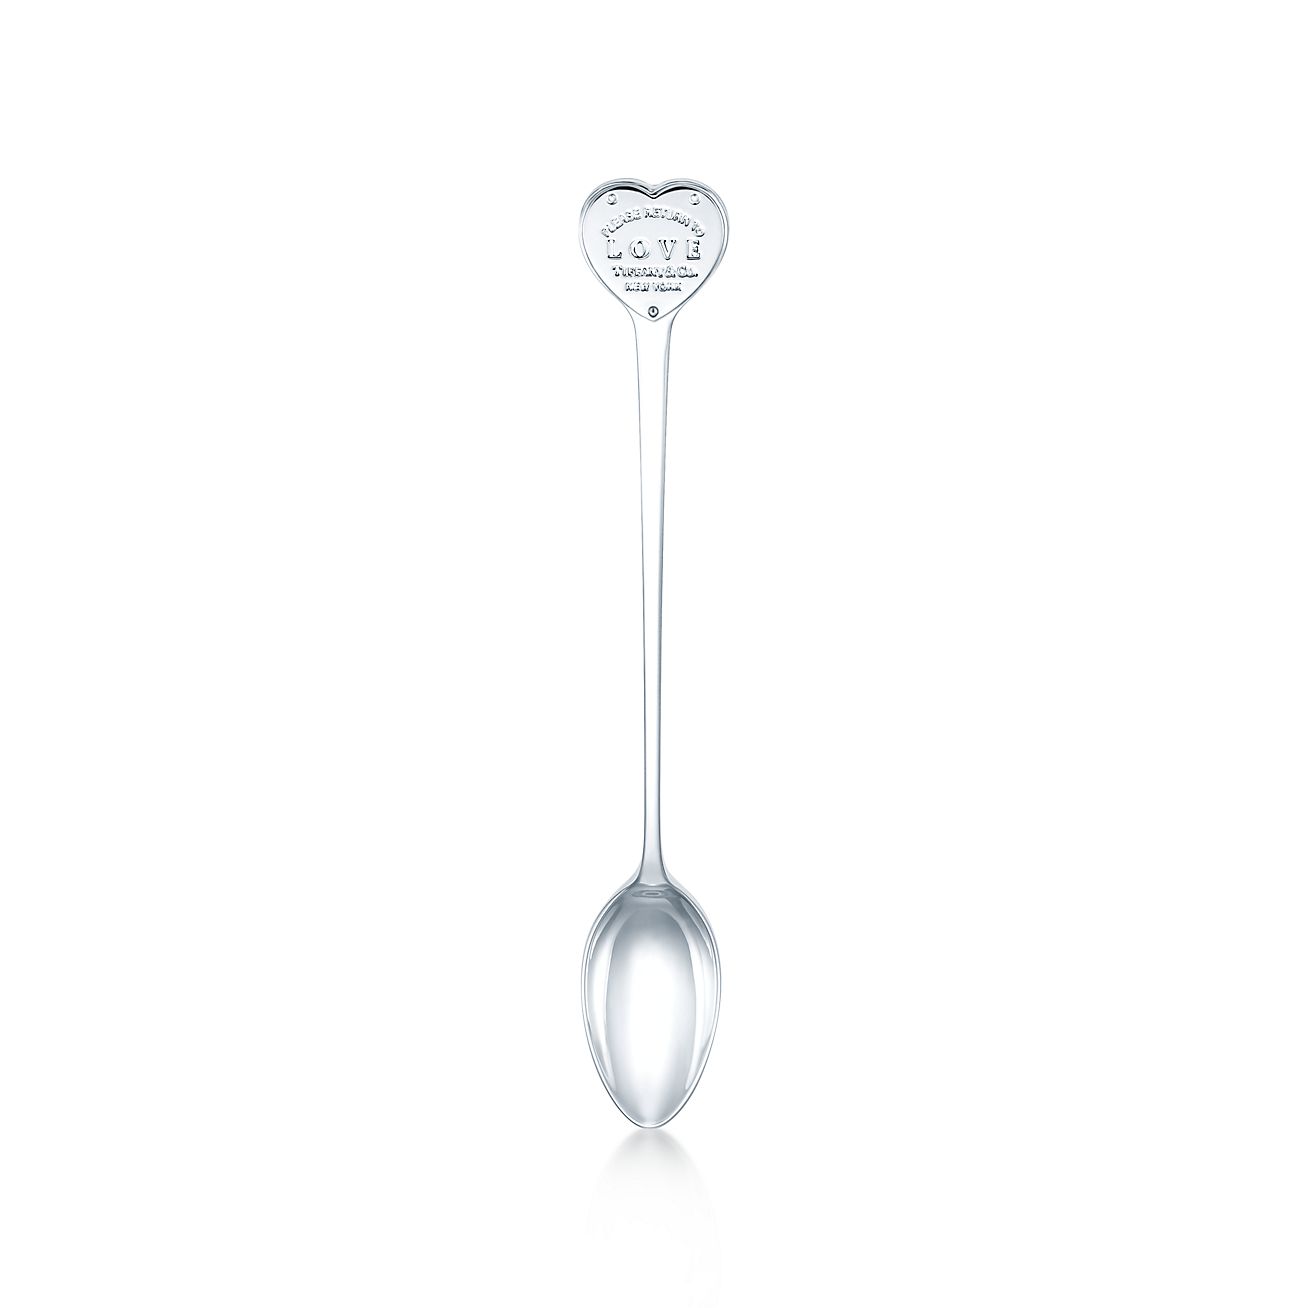 silver feeding spoon for baby